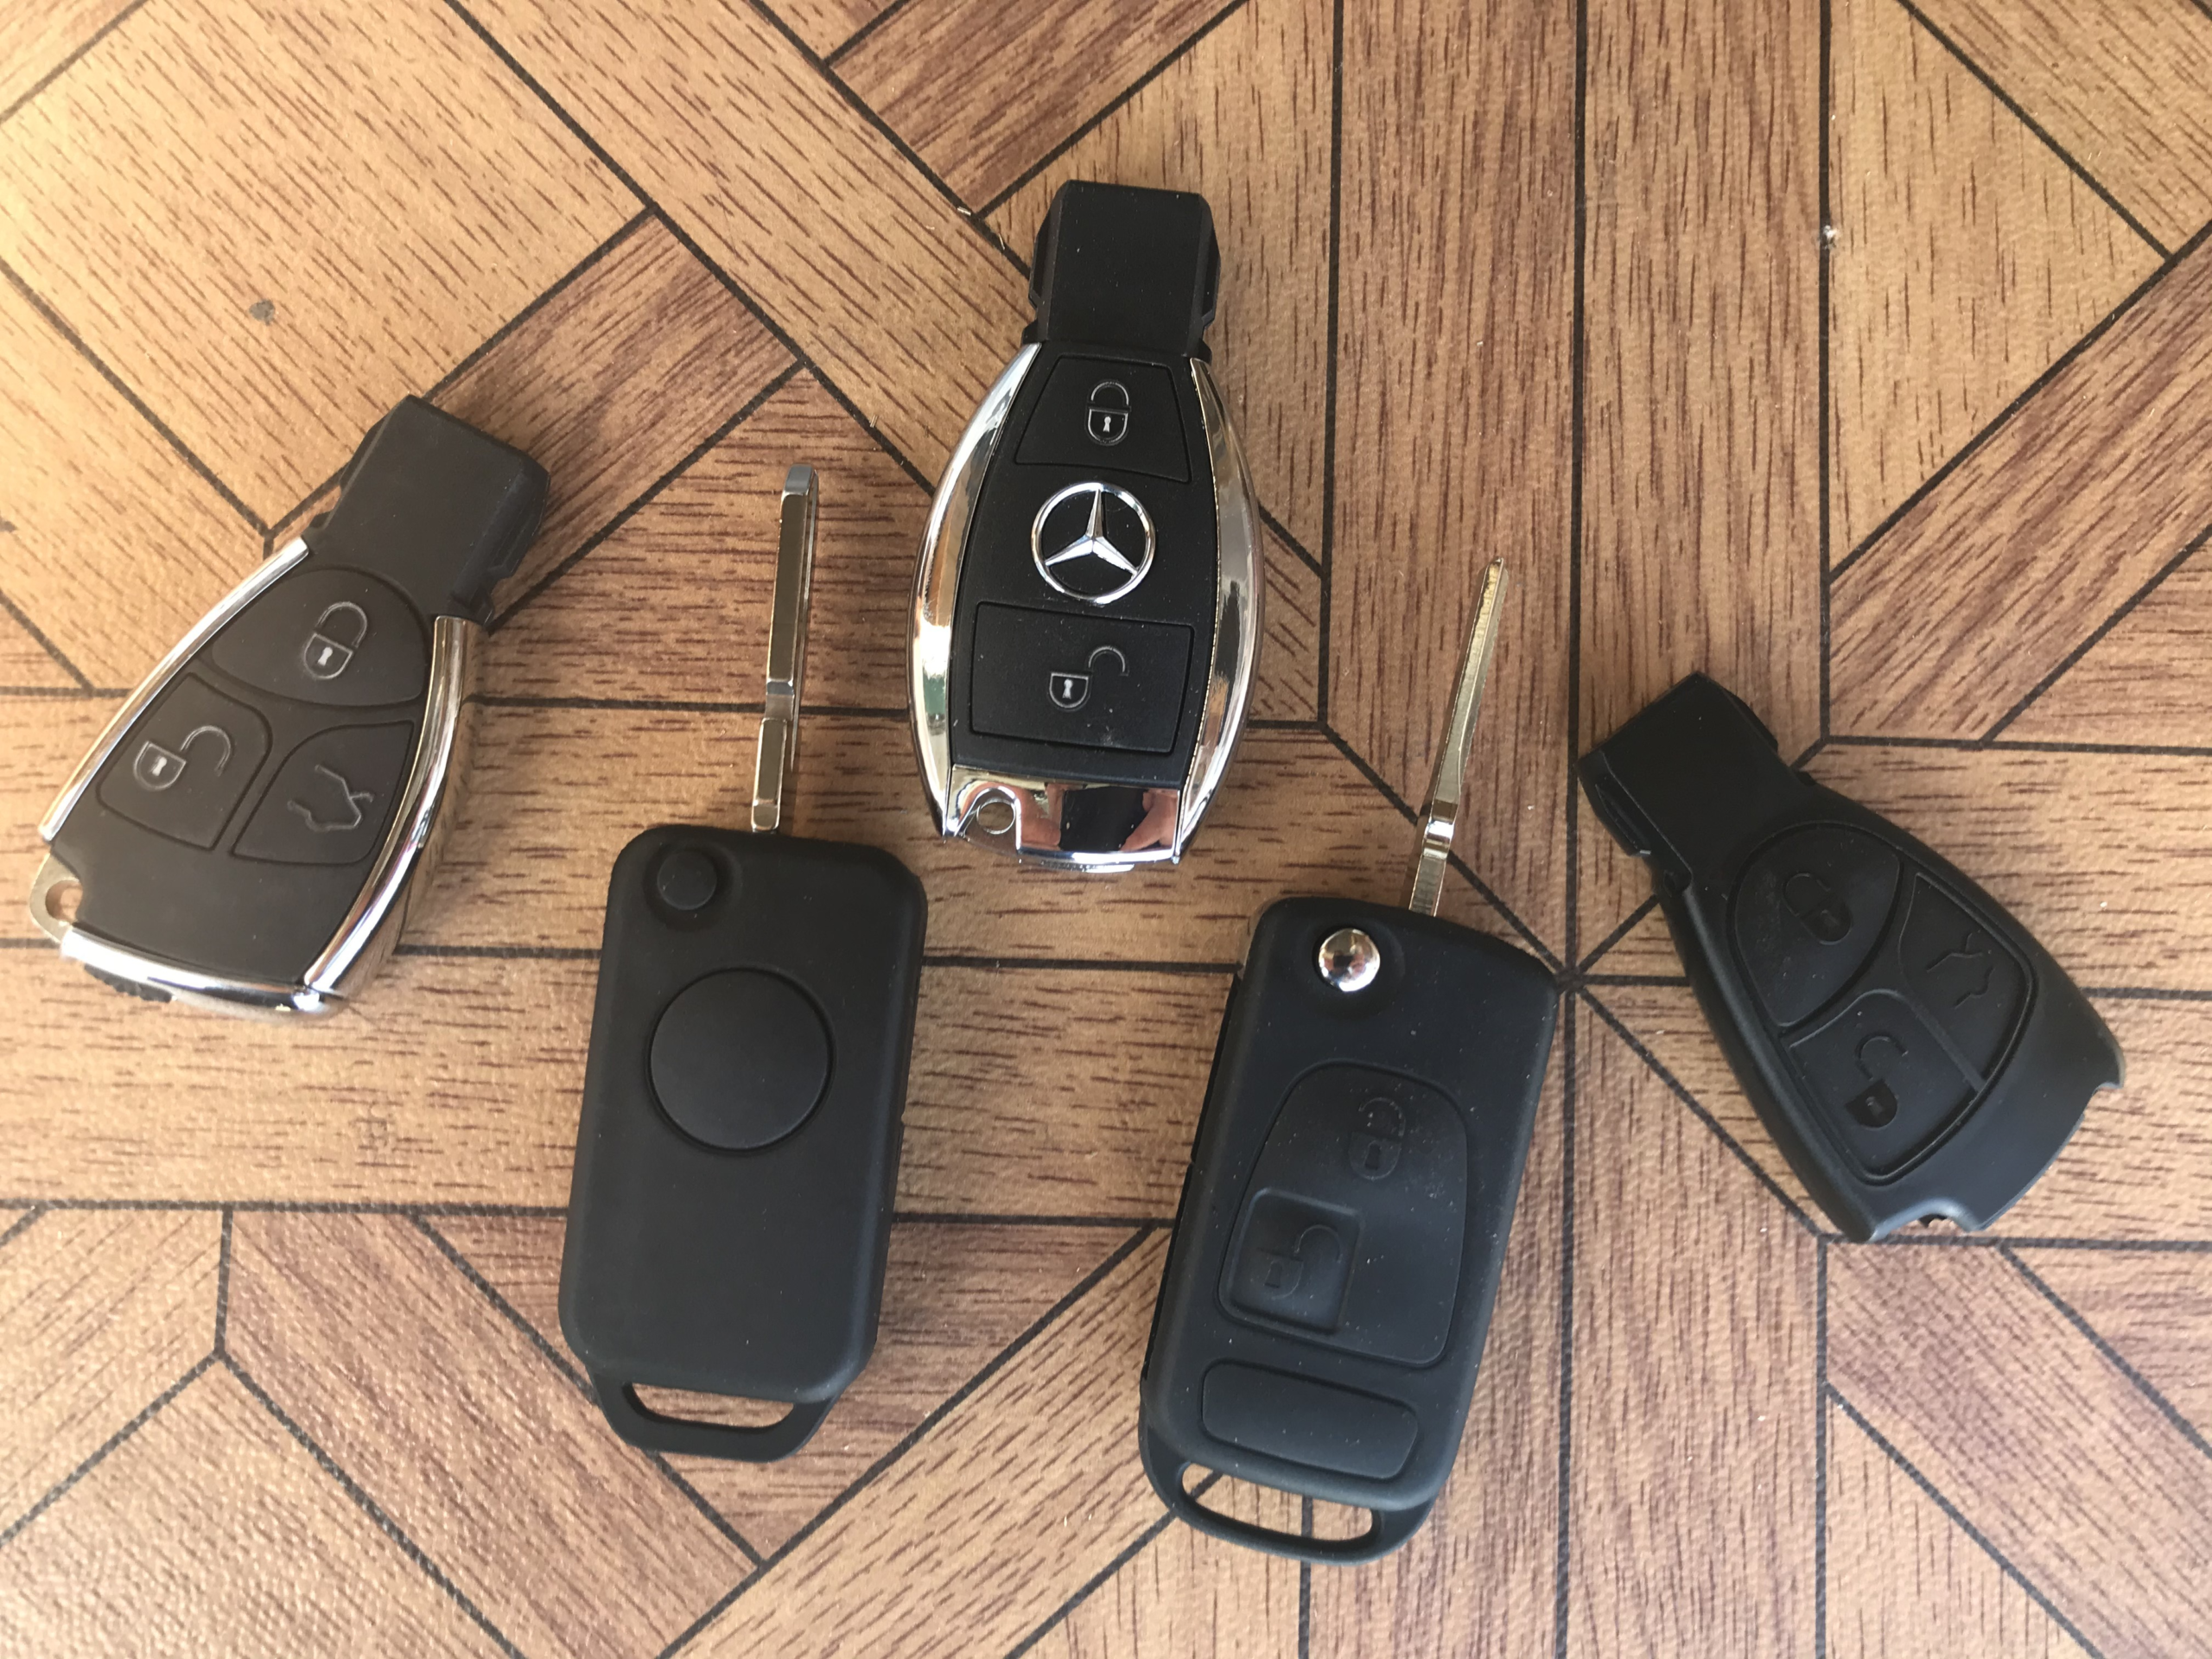 Mercedes remote keys